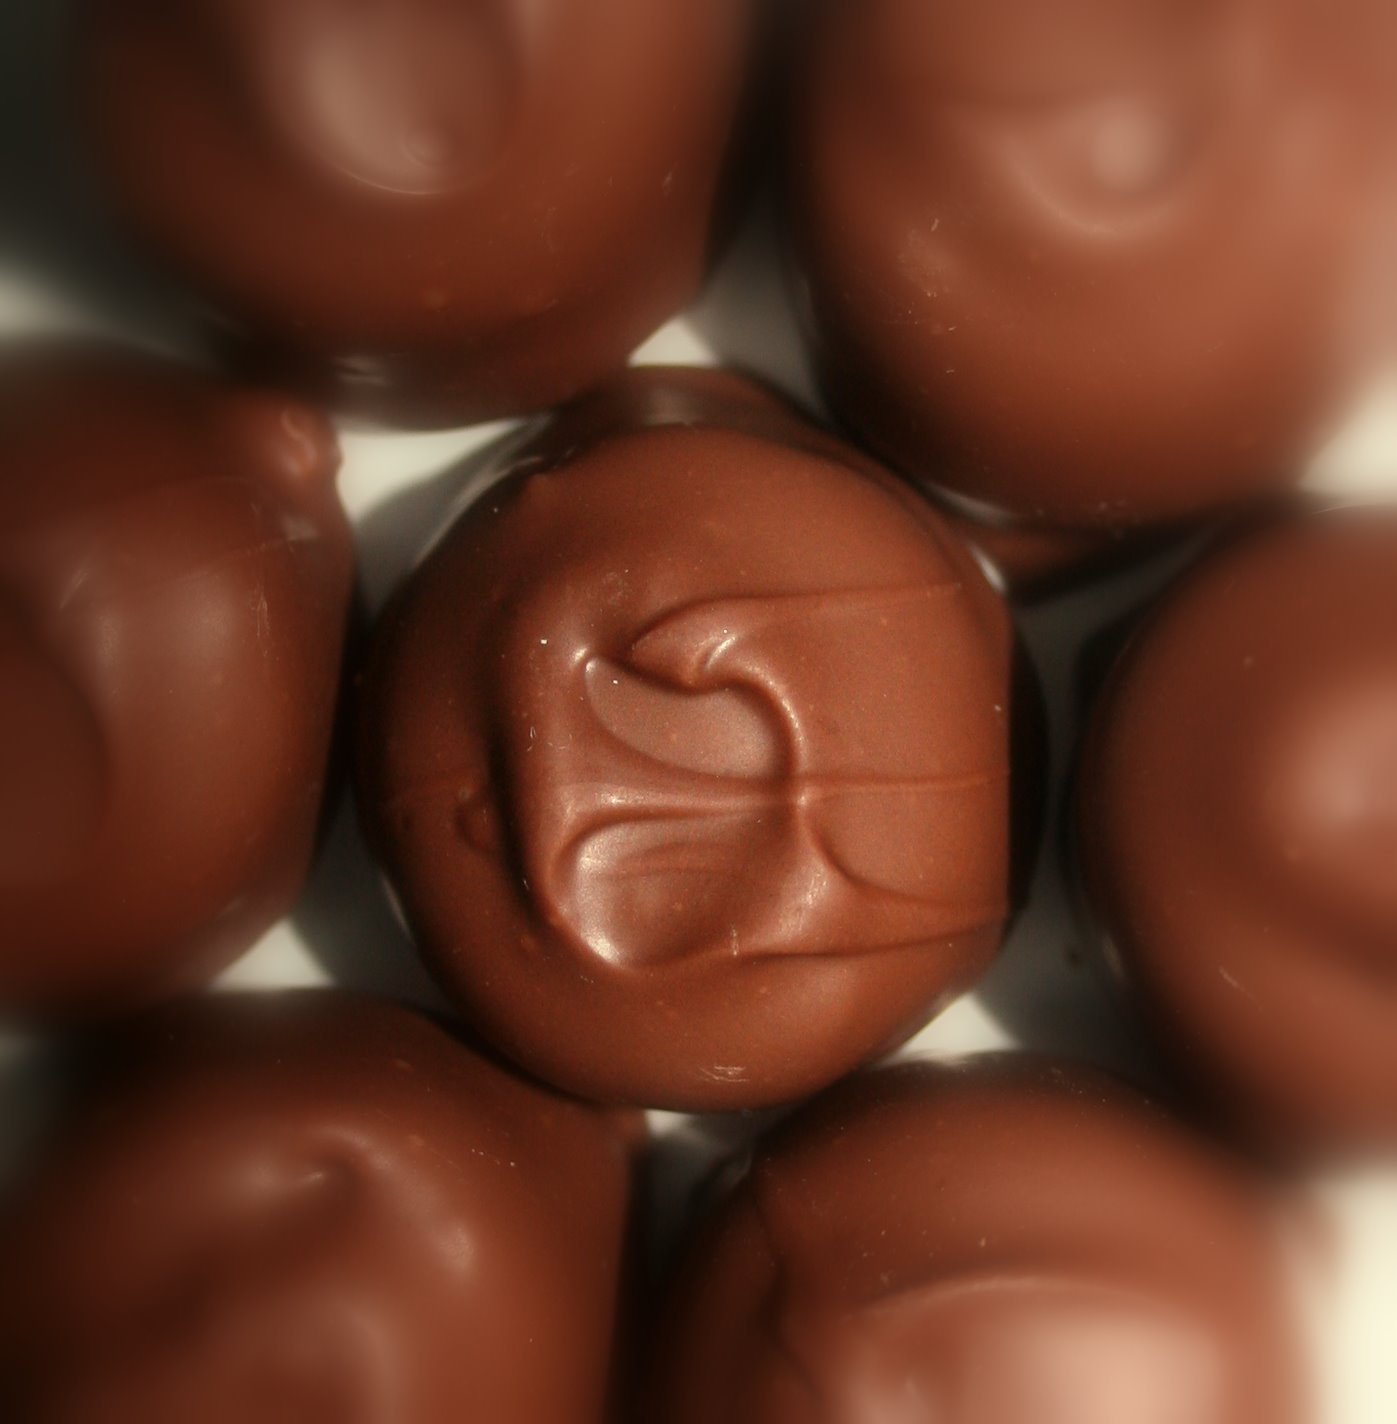 [chocolates.jpg]